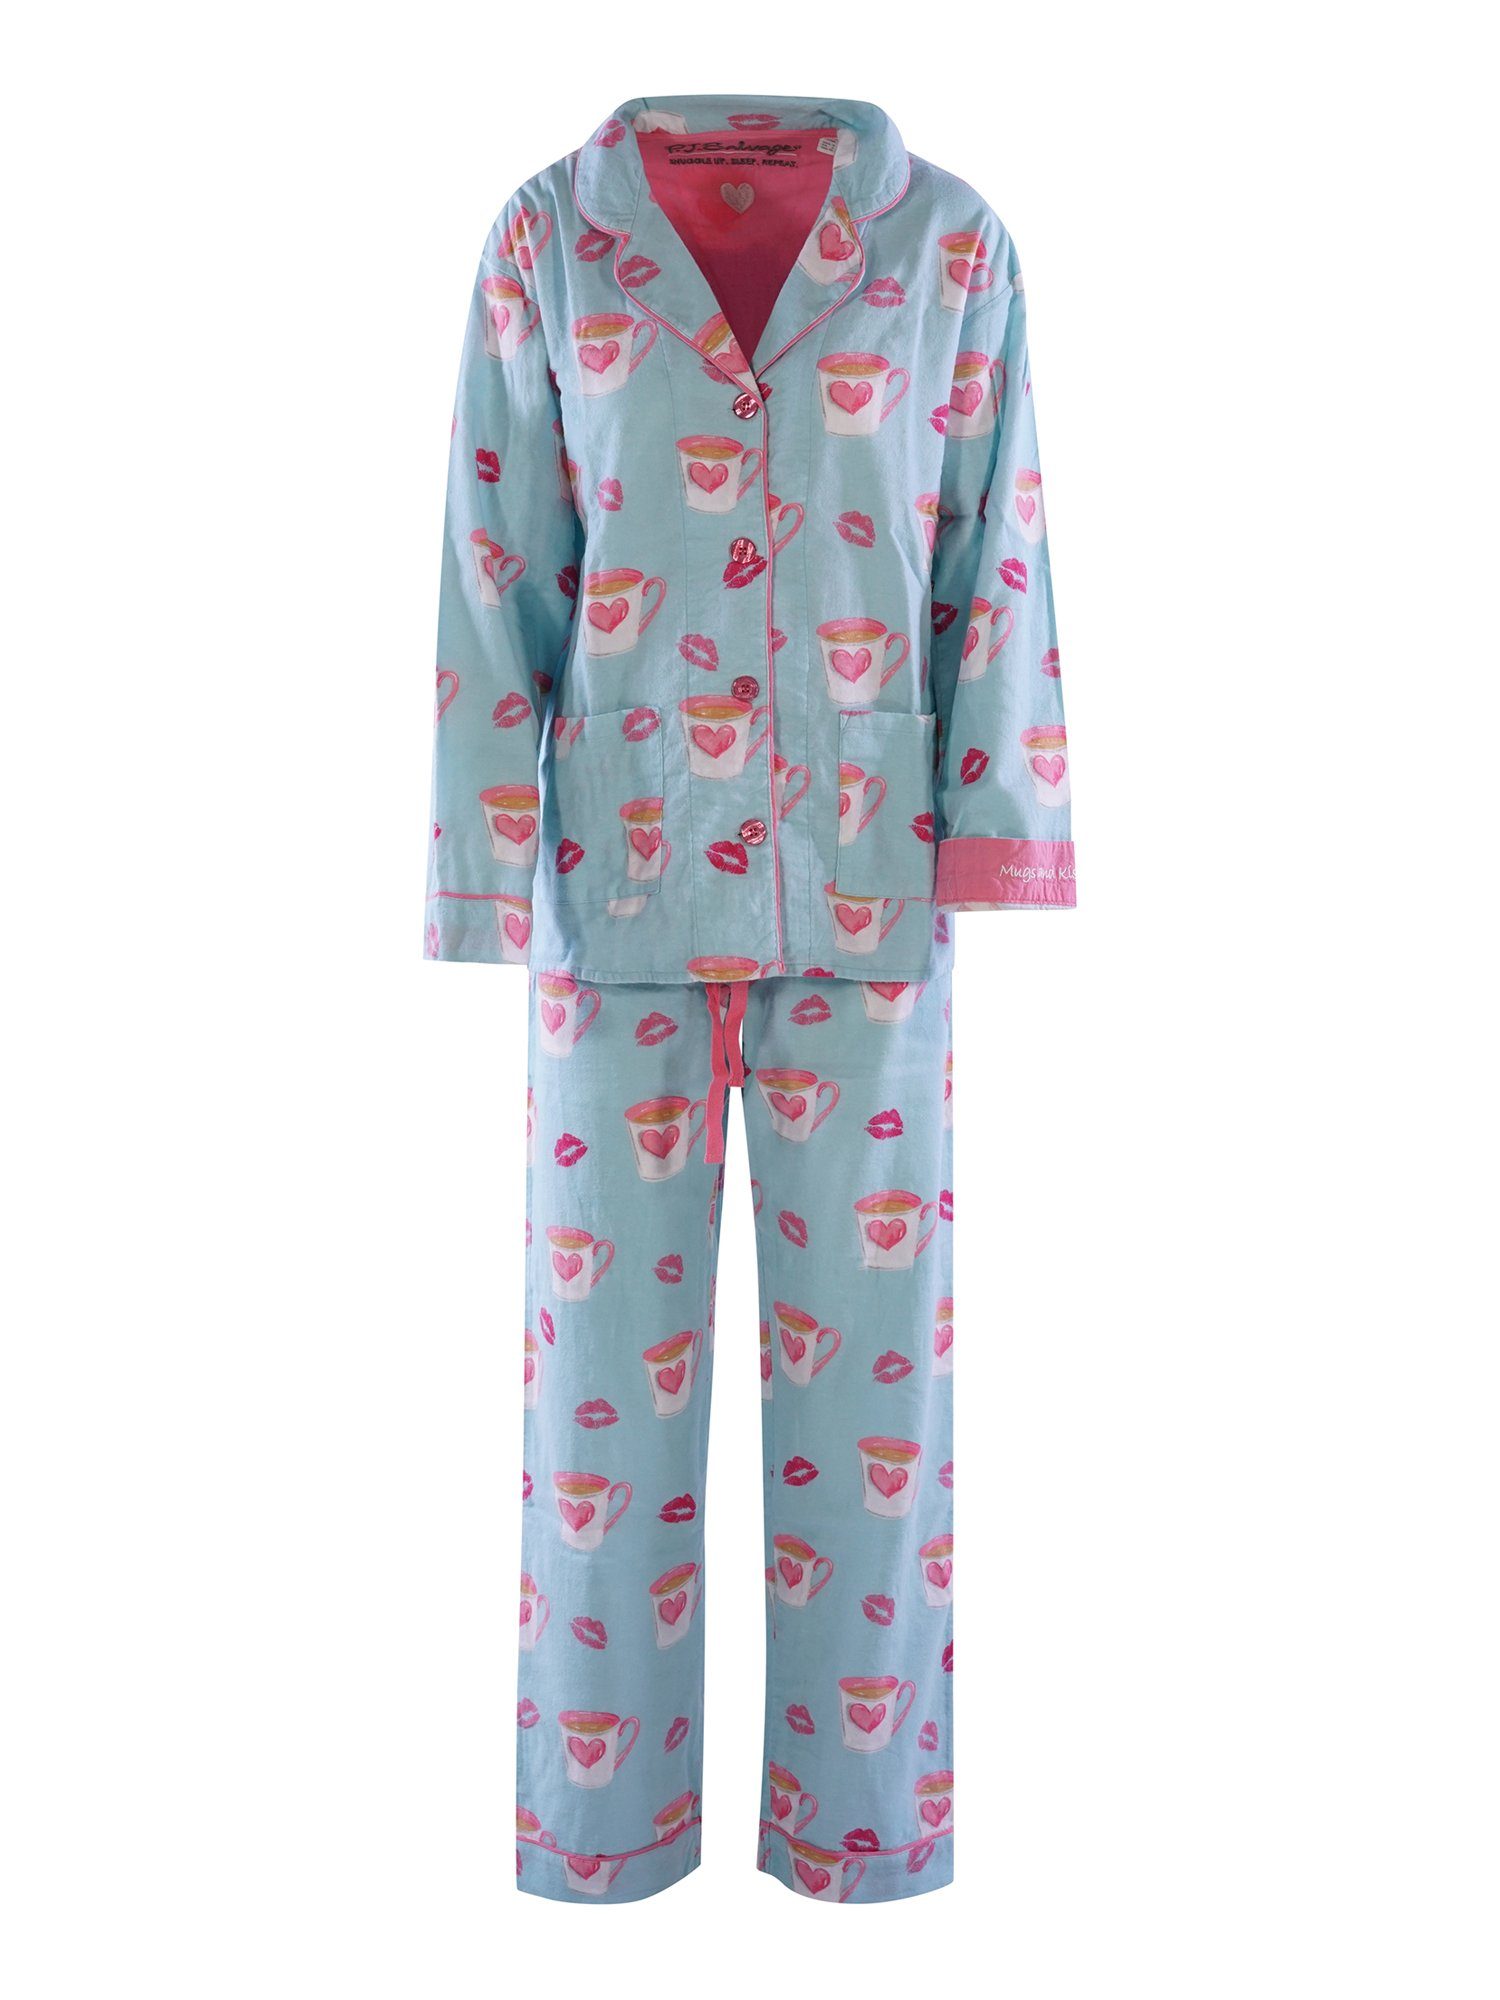 PJ Salvage pyjama Flanells schlafmode Pyjama aqua schlafanzug